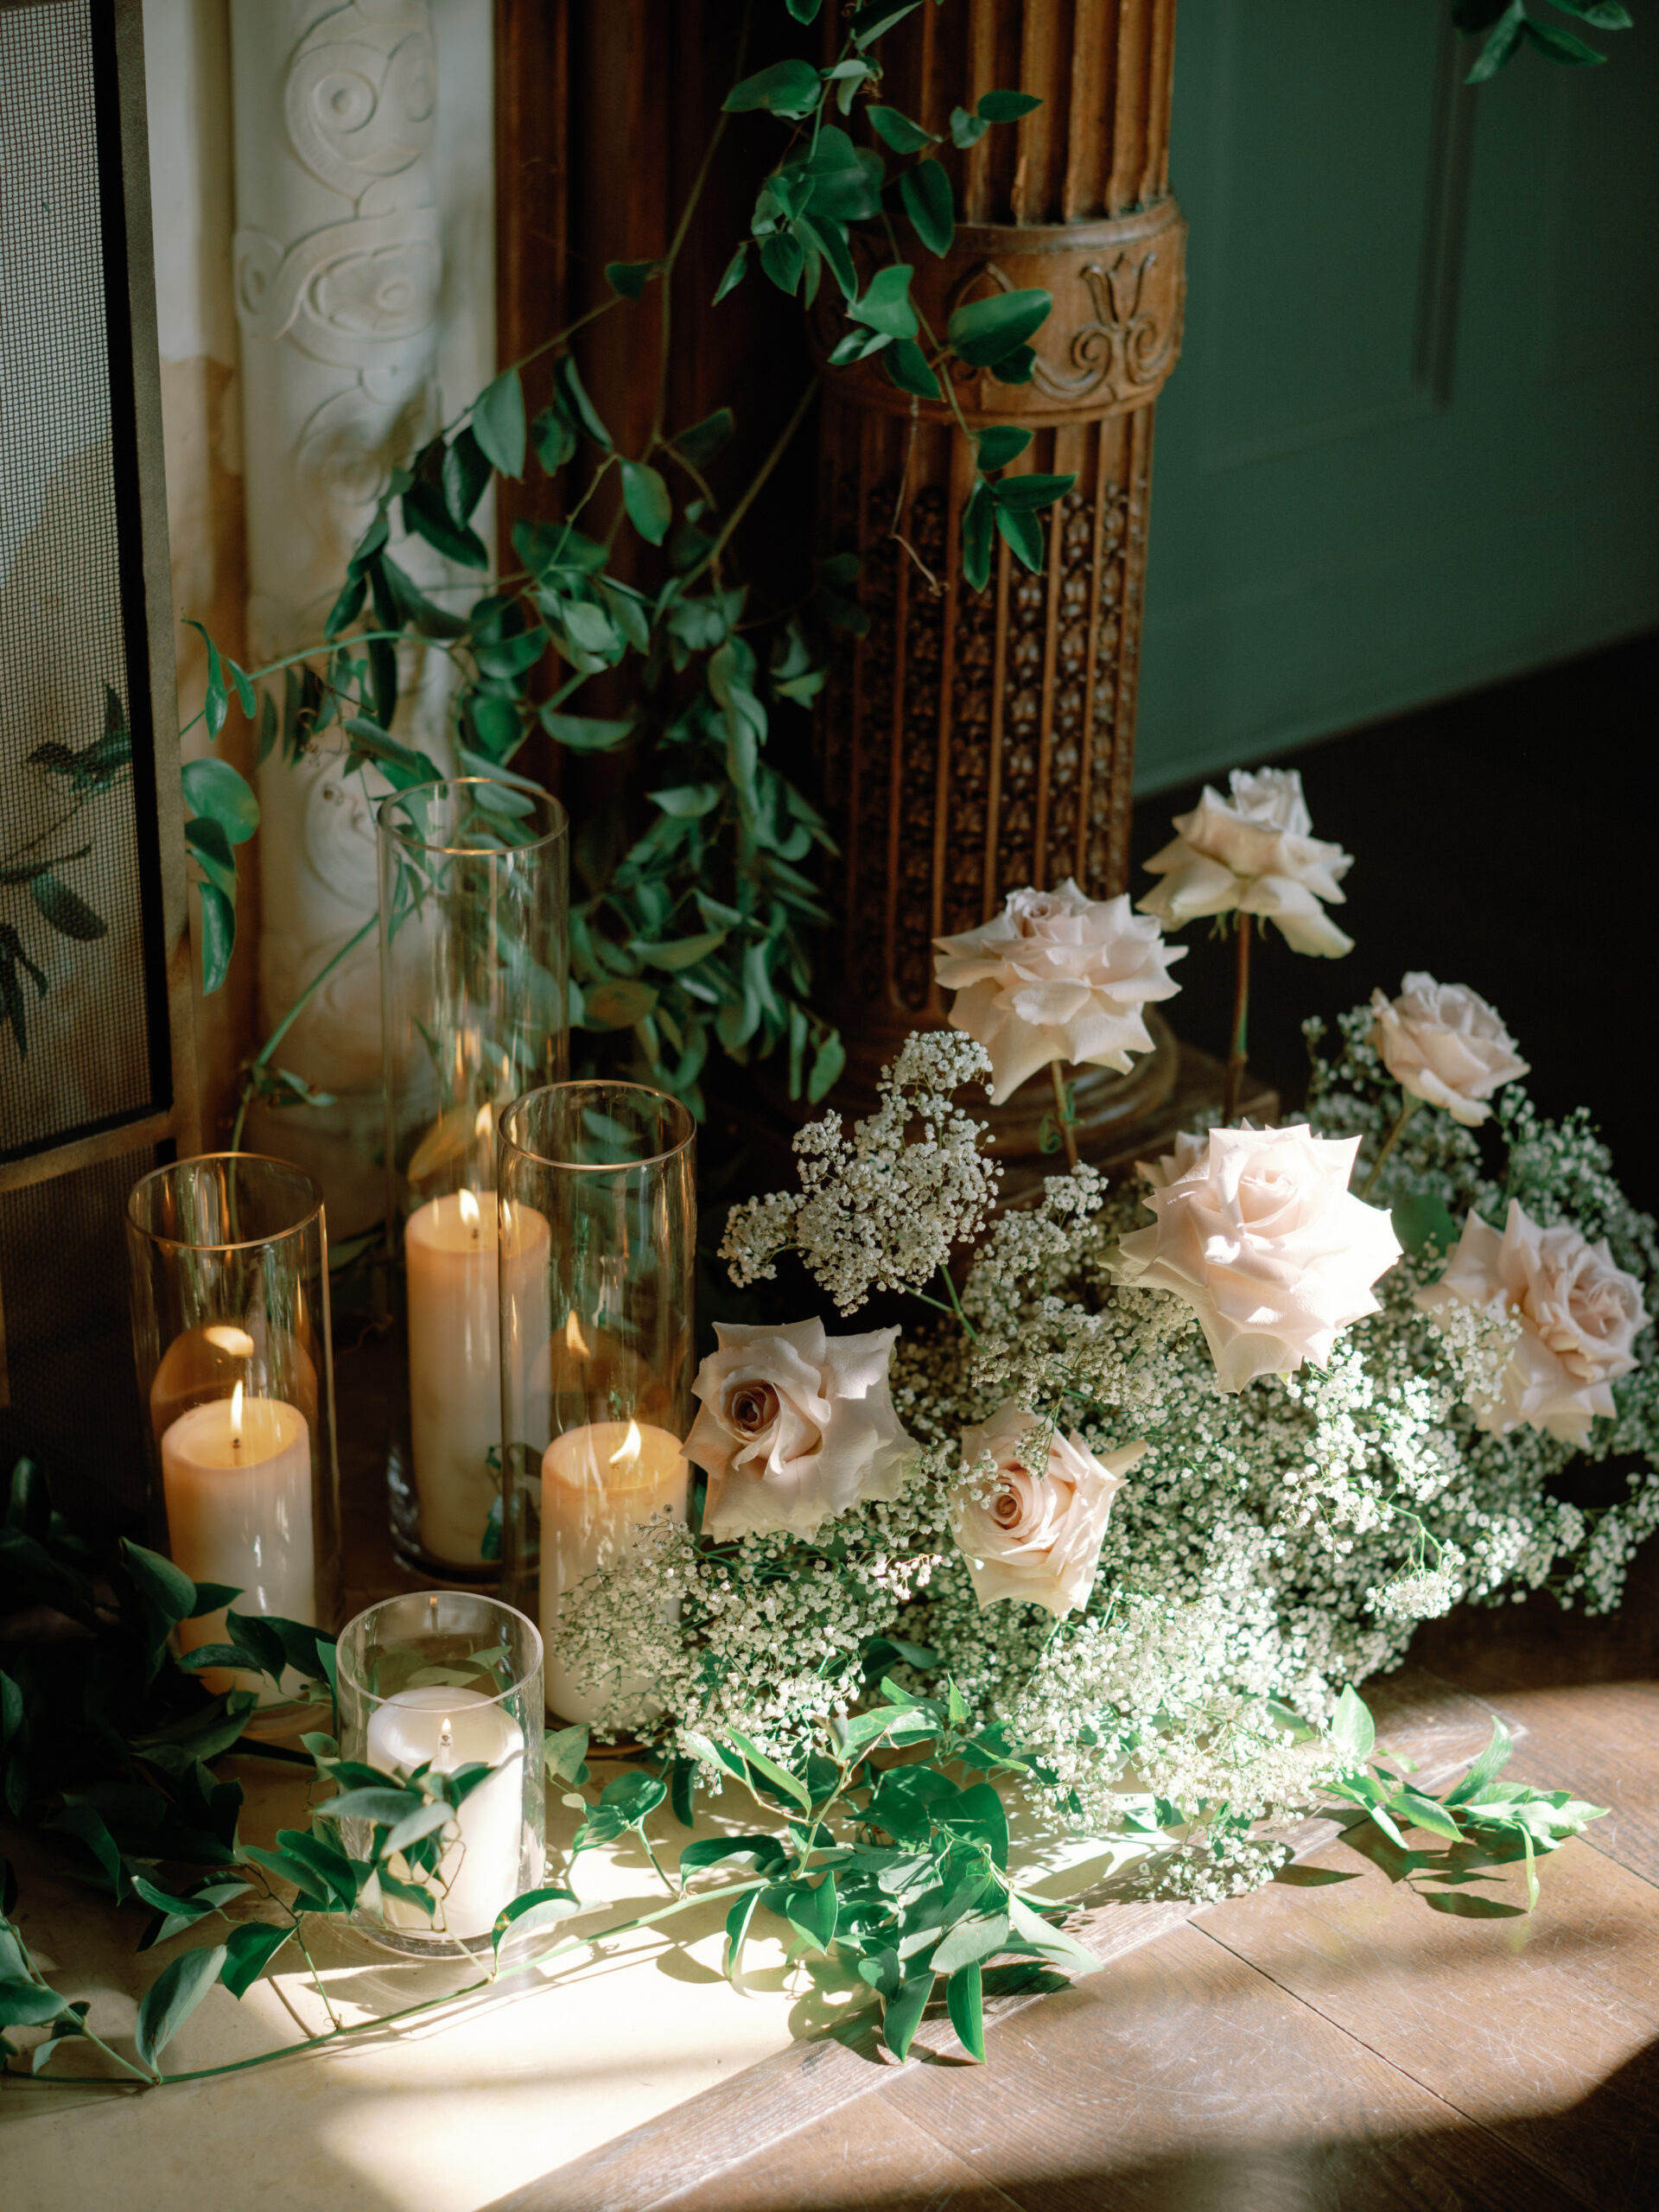 Still image of pretty flowers in the wedding venue by Jenny Fu Studio